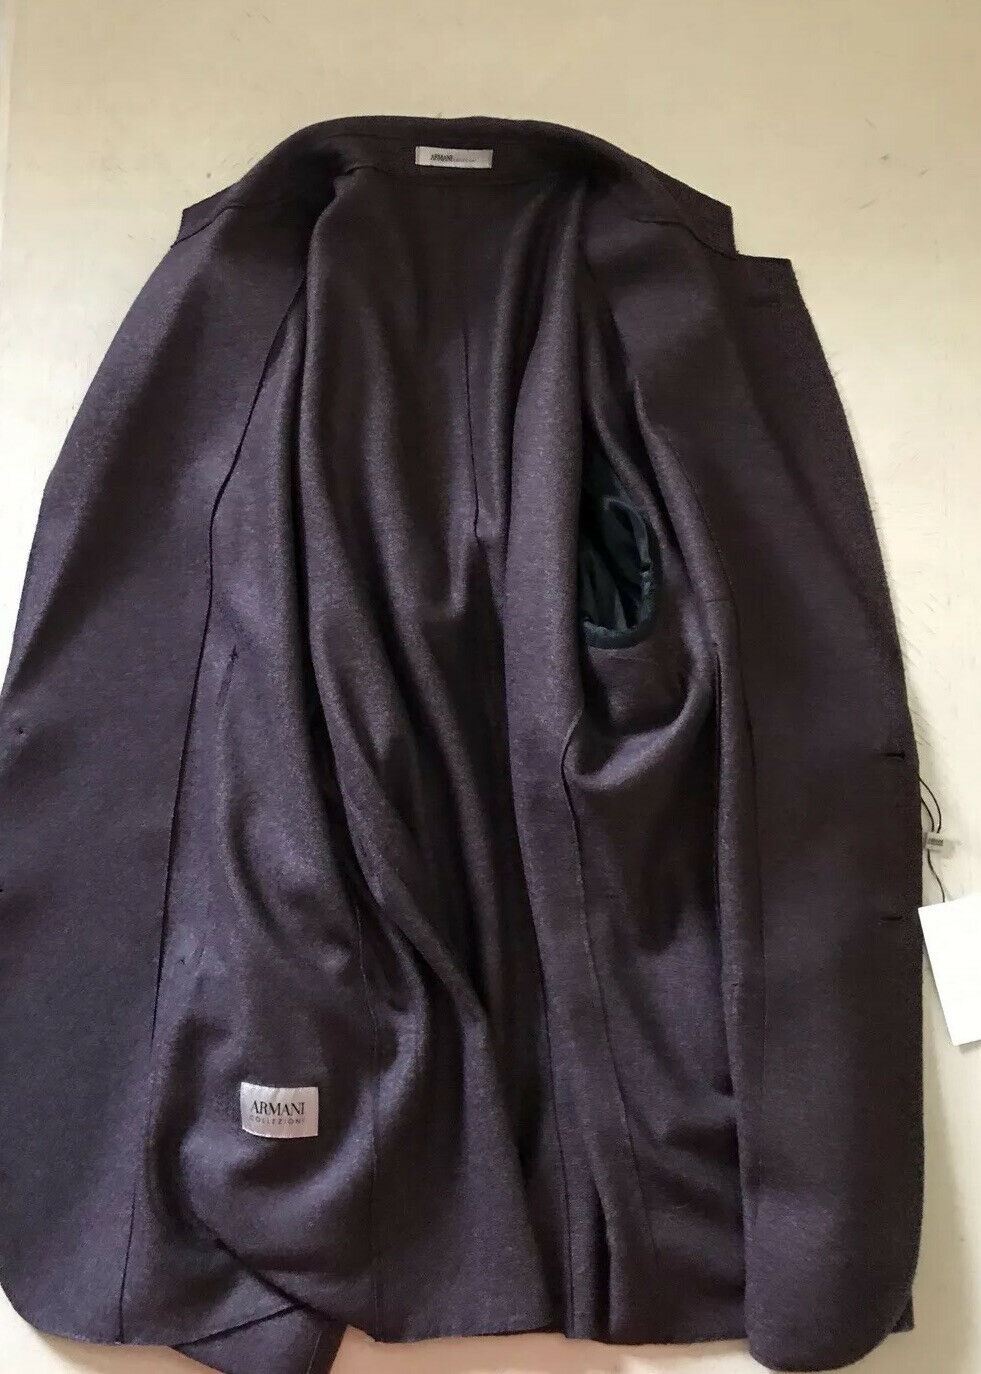 NWT Armani Collezioni Спортивная куртка Блейзеры Бордовый 46R США ( 56R EU )